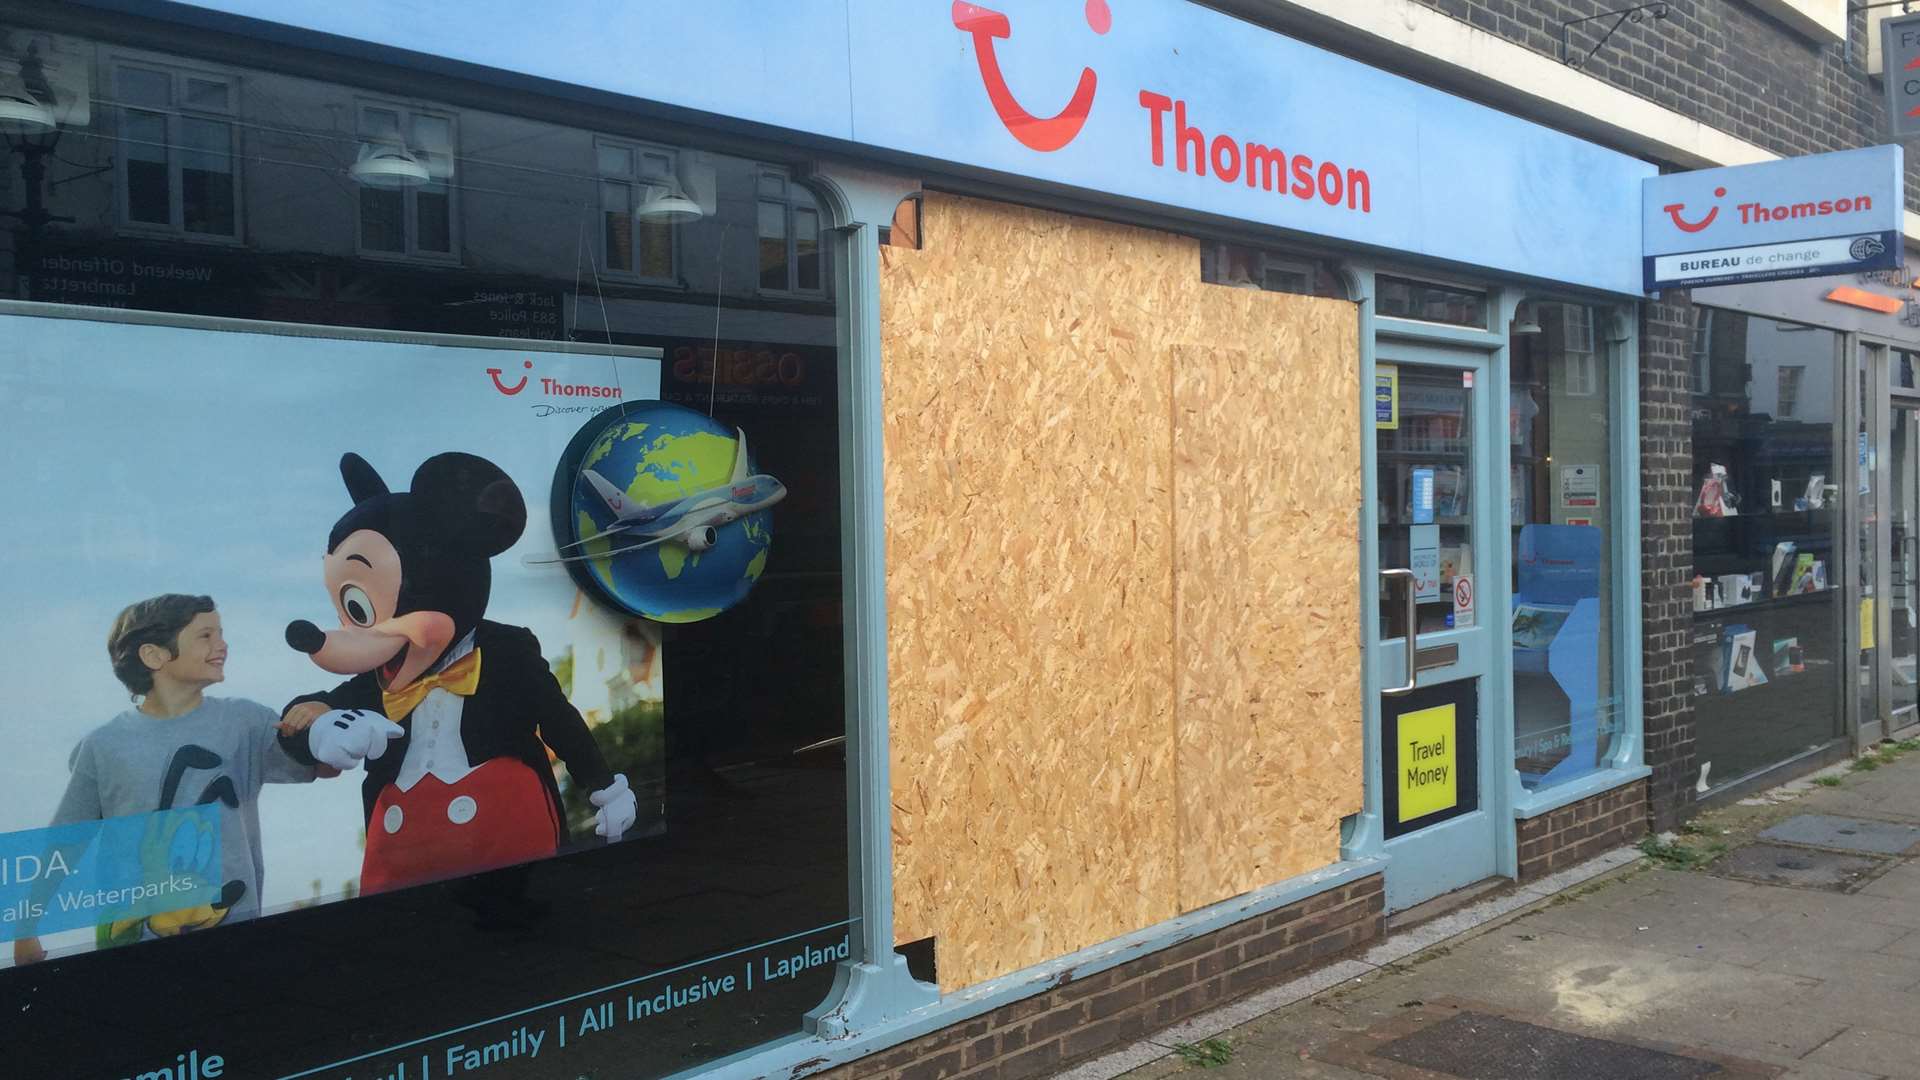 Thomson travel agents had its window damaged.